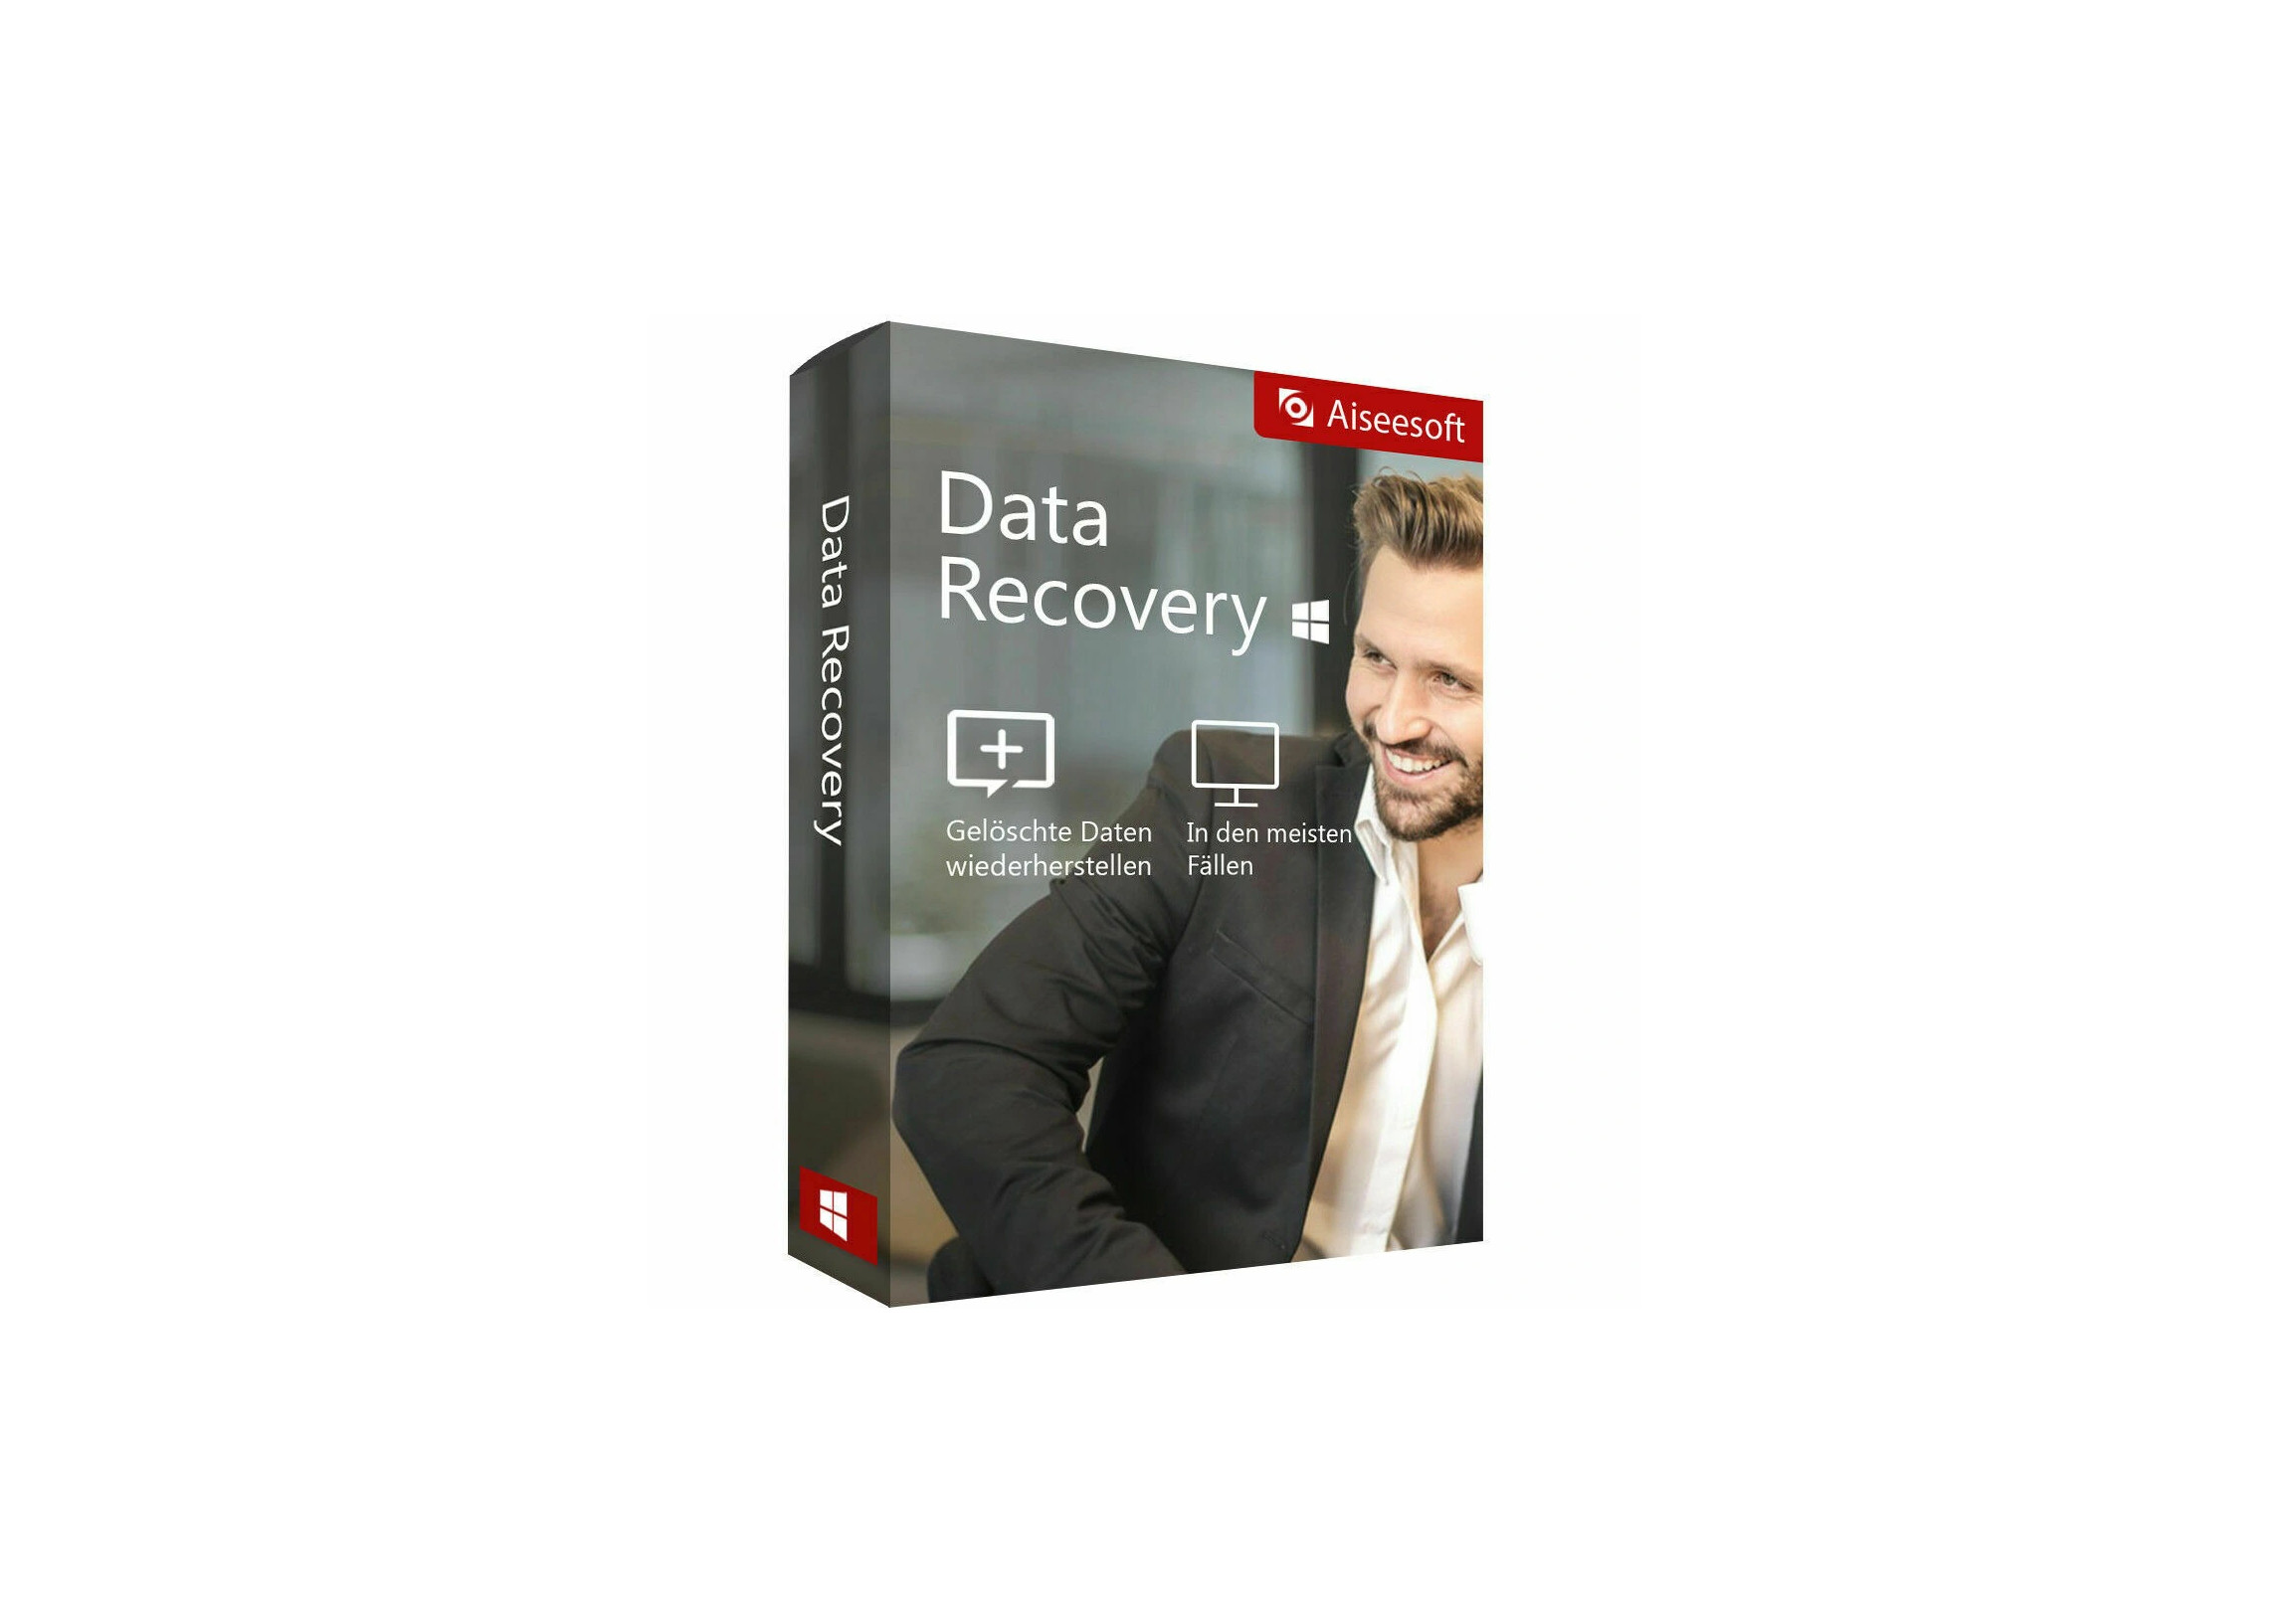 Aiseesoft Data Recovery Key (1 Year / 1 PC) 2.25 $